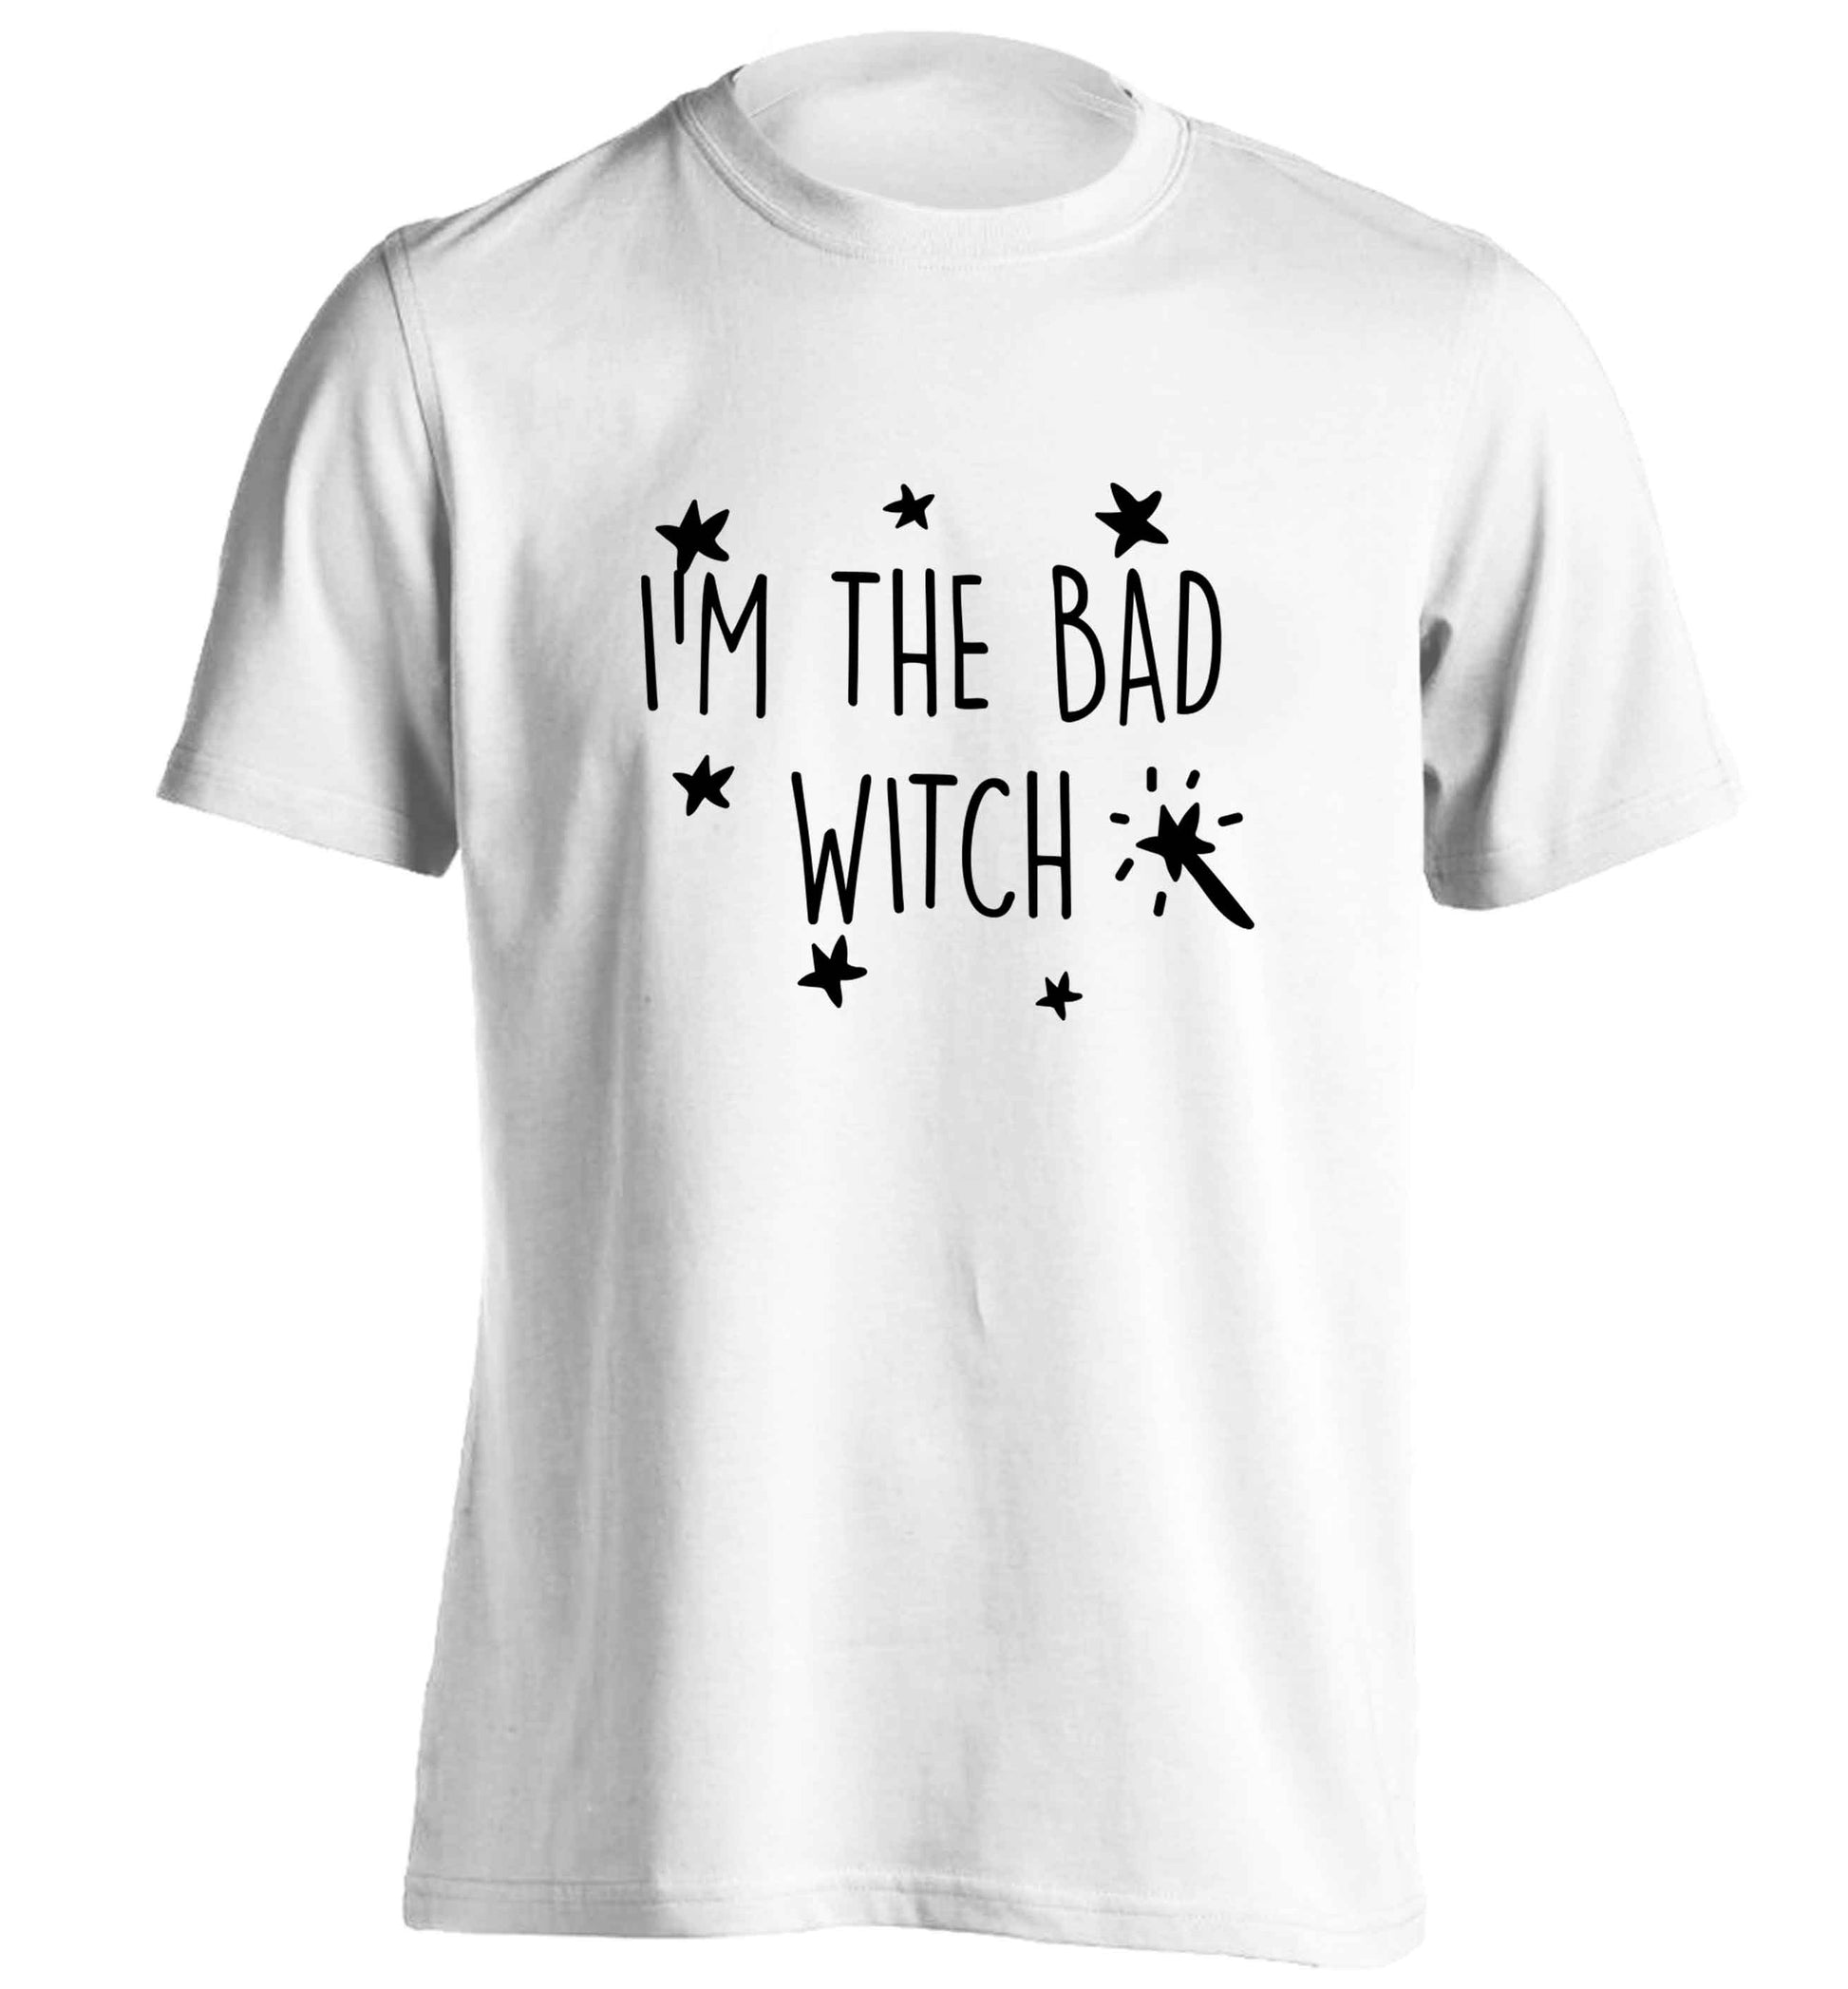 Bad witch adults unisex white Tshirt 2XL